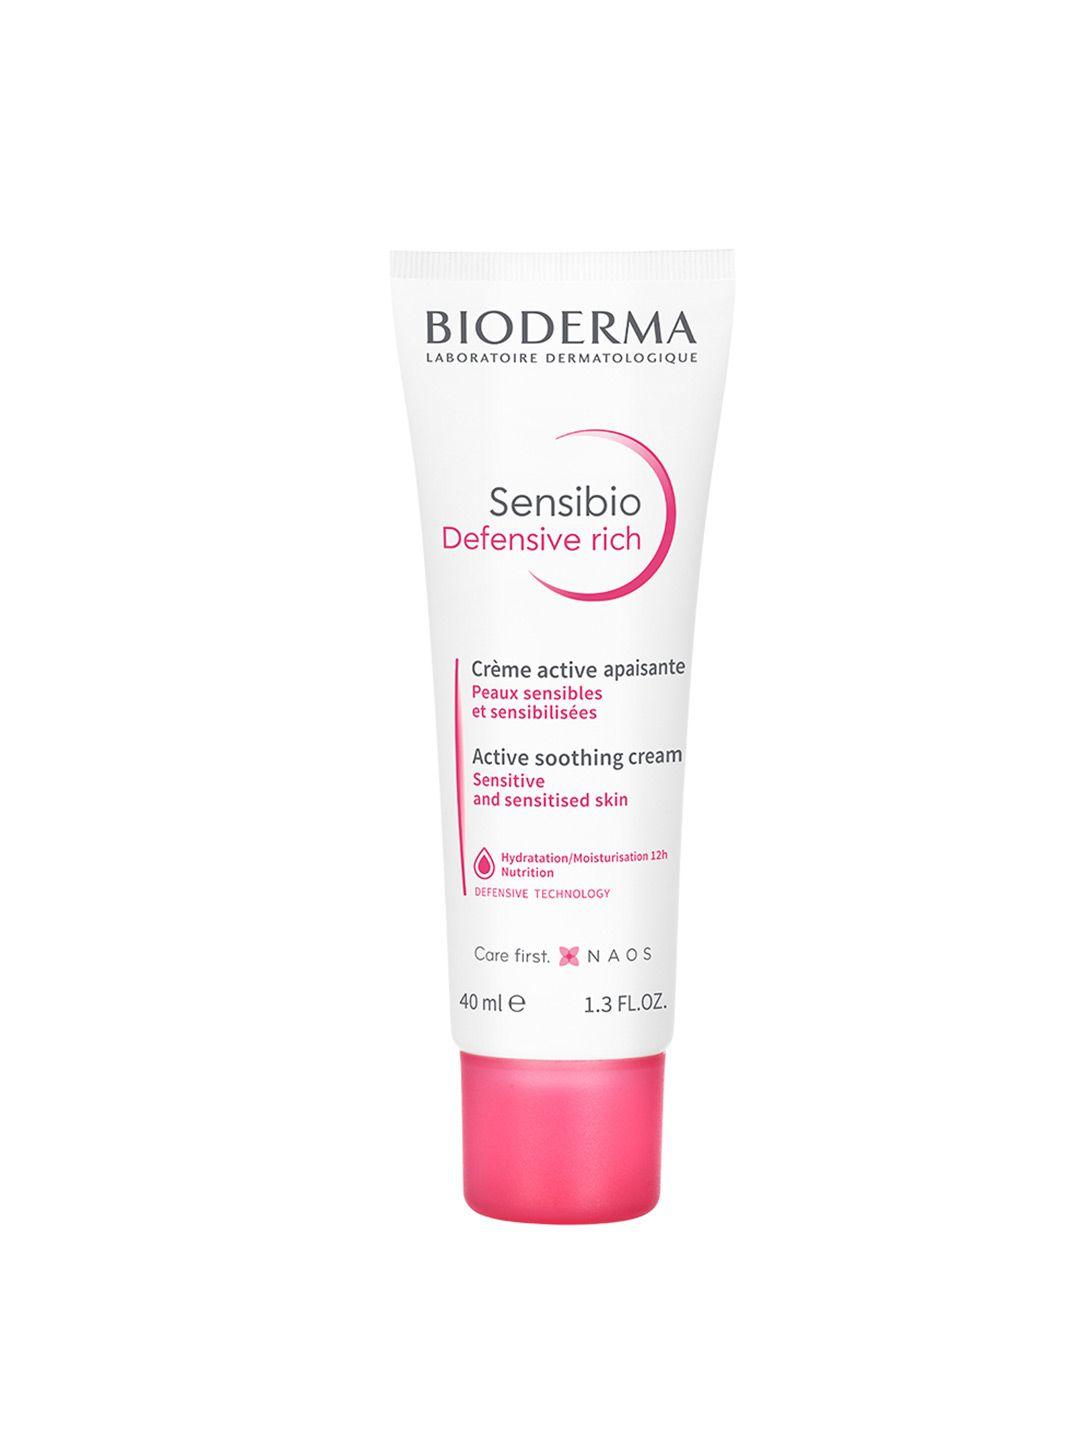 bioderma sensibio defensive rich active soothing cream 40ml